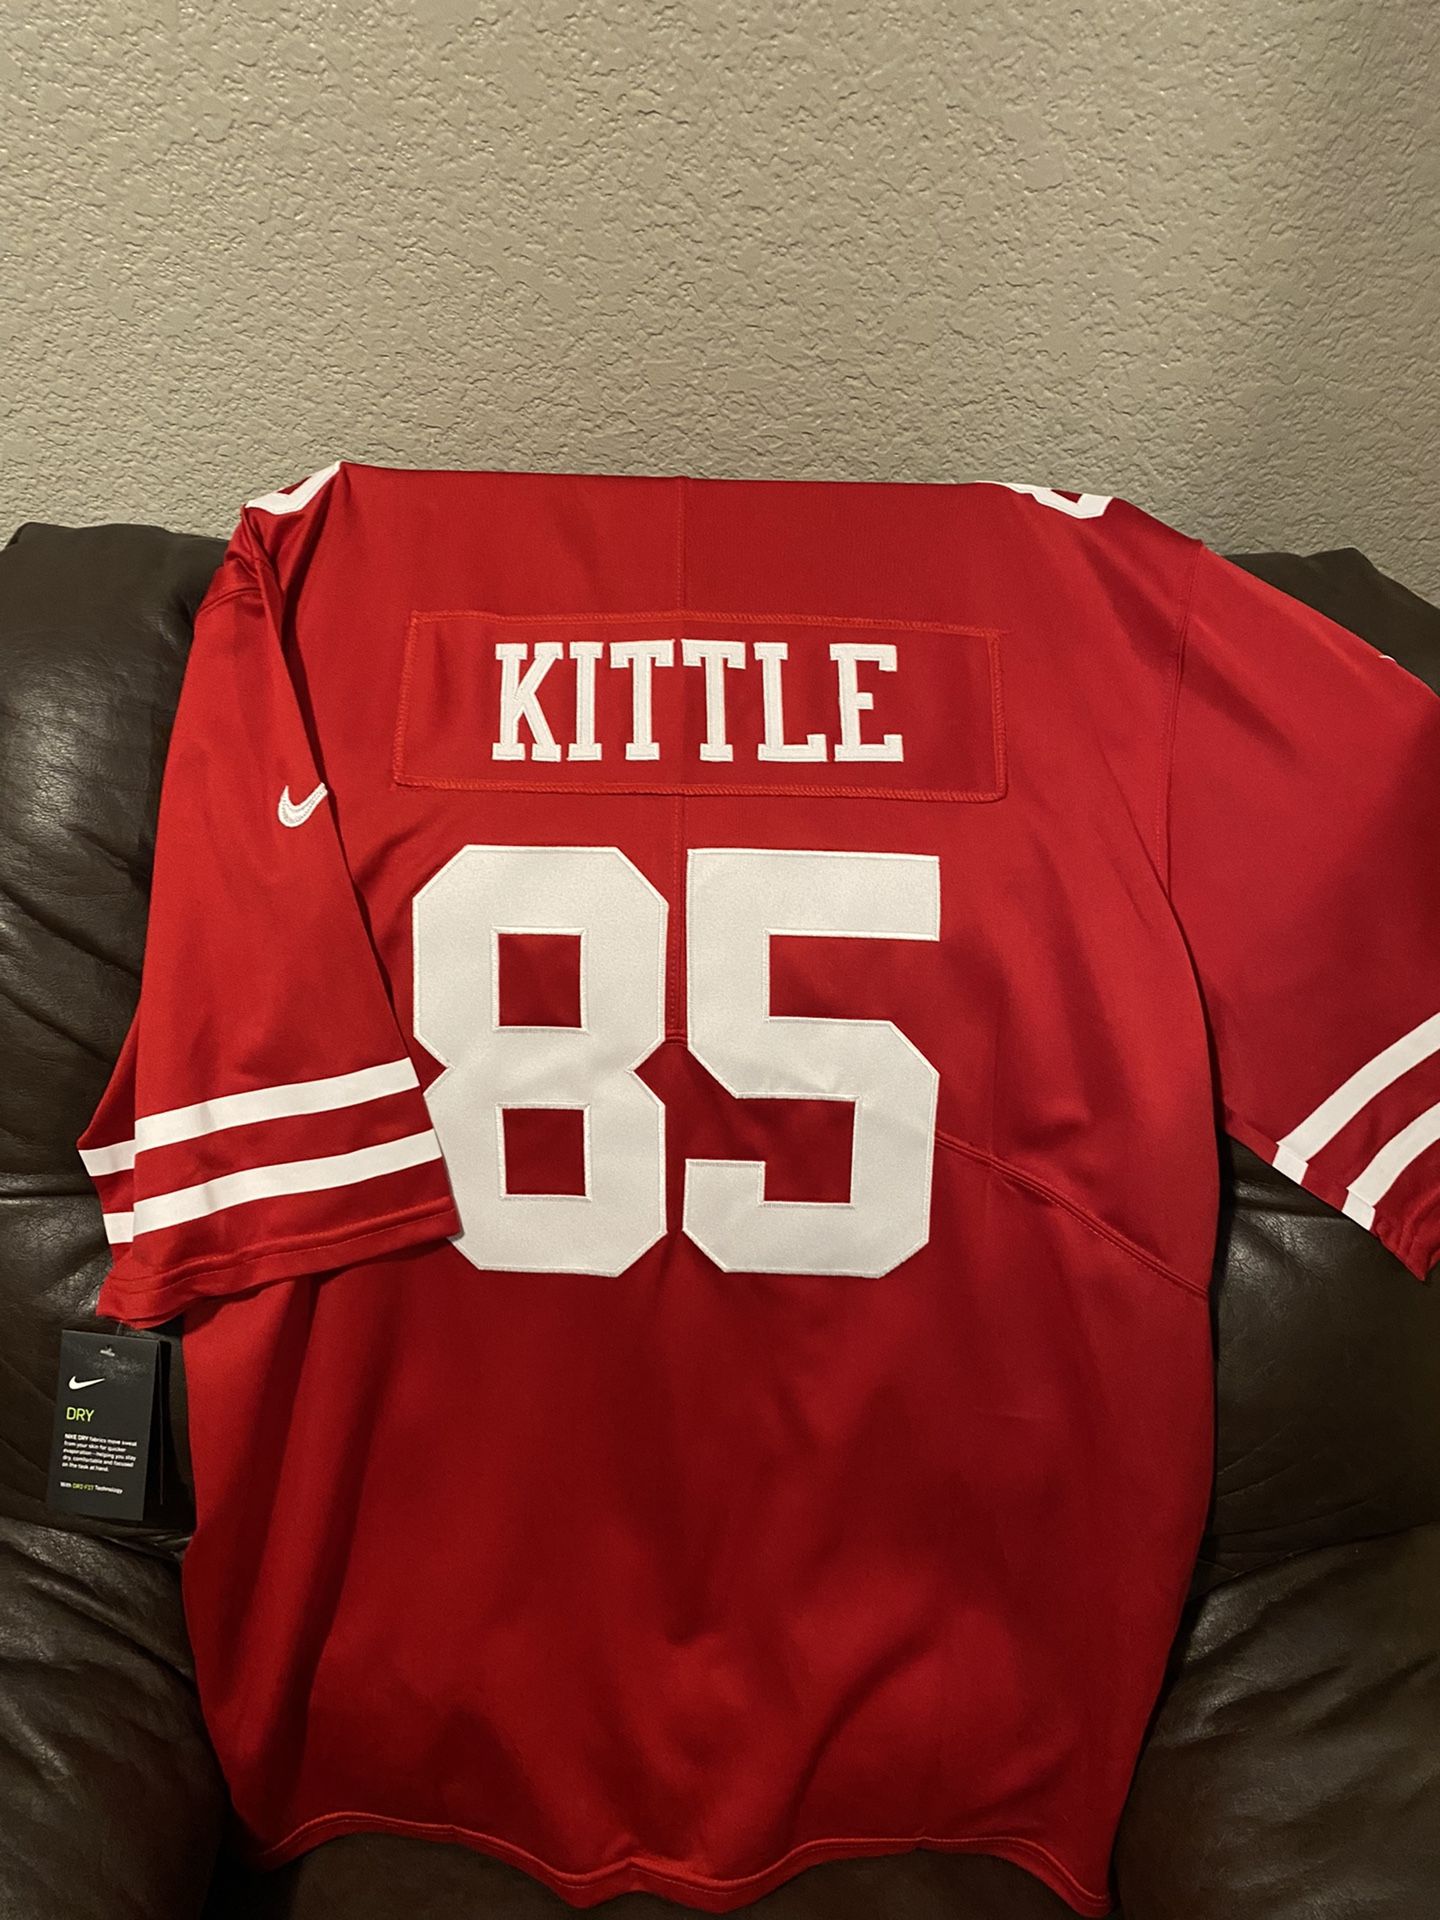 NFL Jersey 49ers Kittle